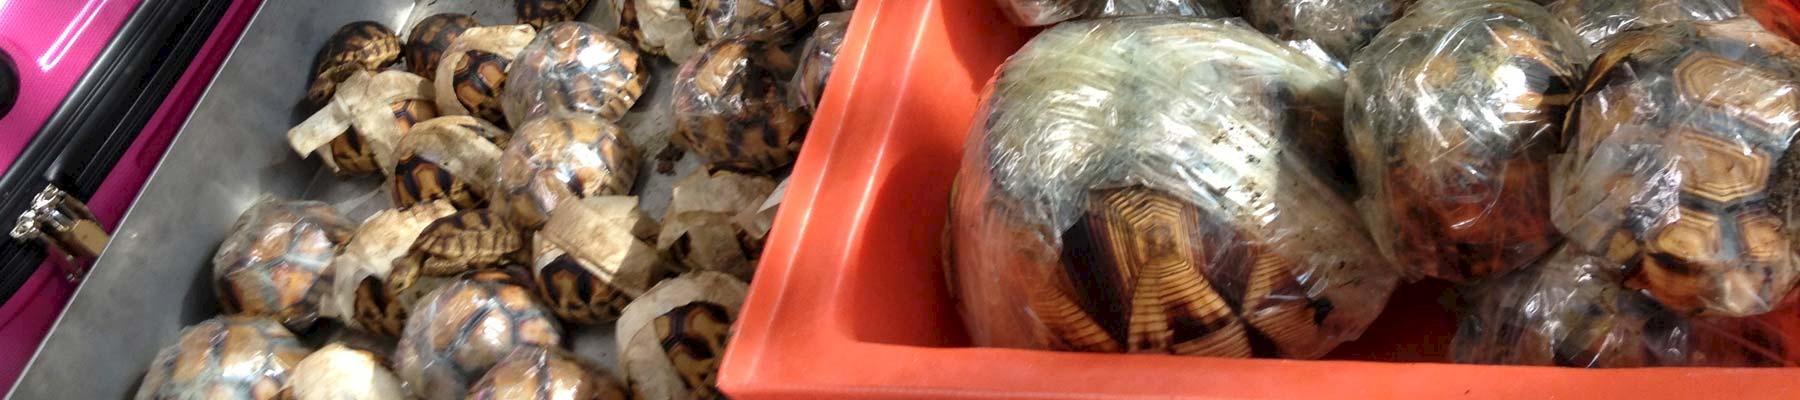 54 Ploughshare Tortoises Astrochelys yniphora and 21 Radiated Tortoises A. radiata were found among luggage at Bangkok airport © Panjit Tansom / TRAFFIC 